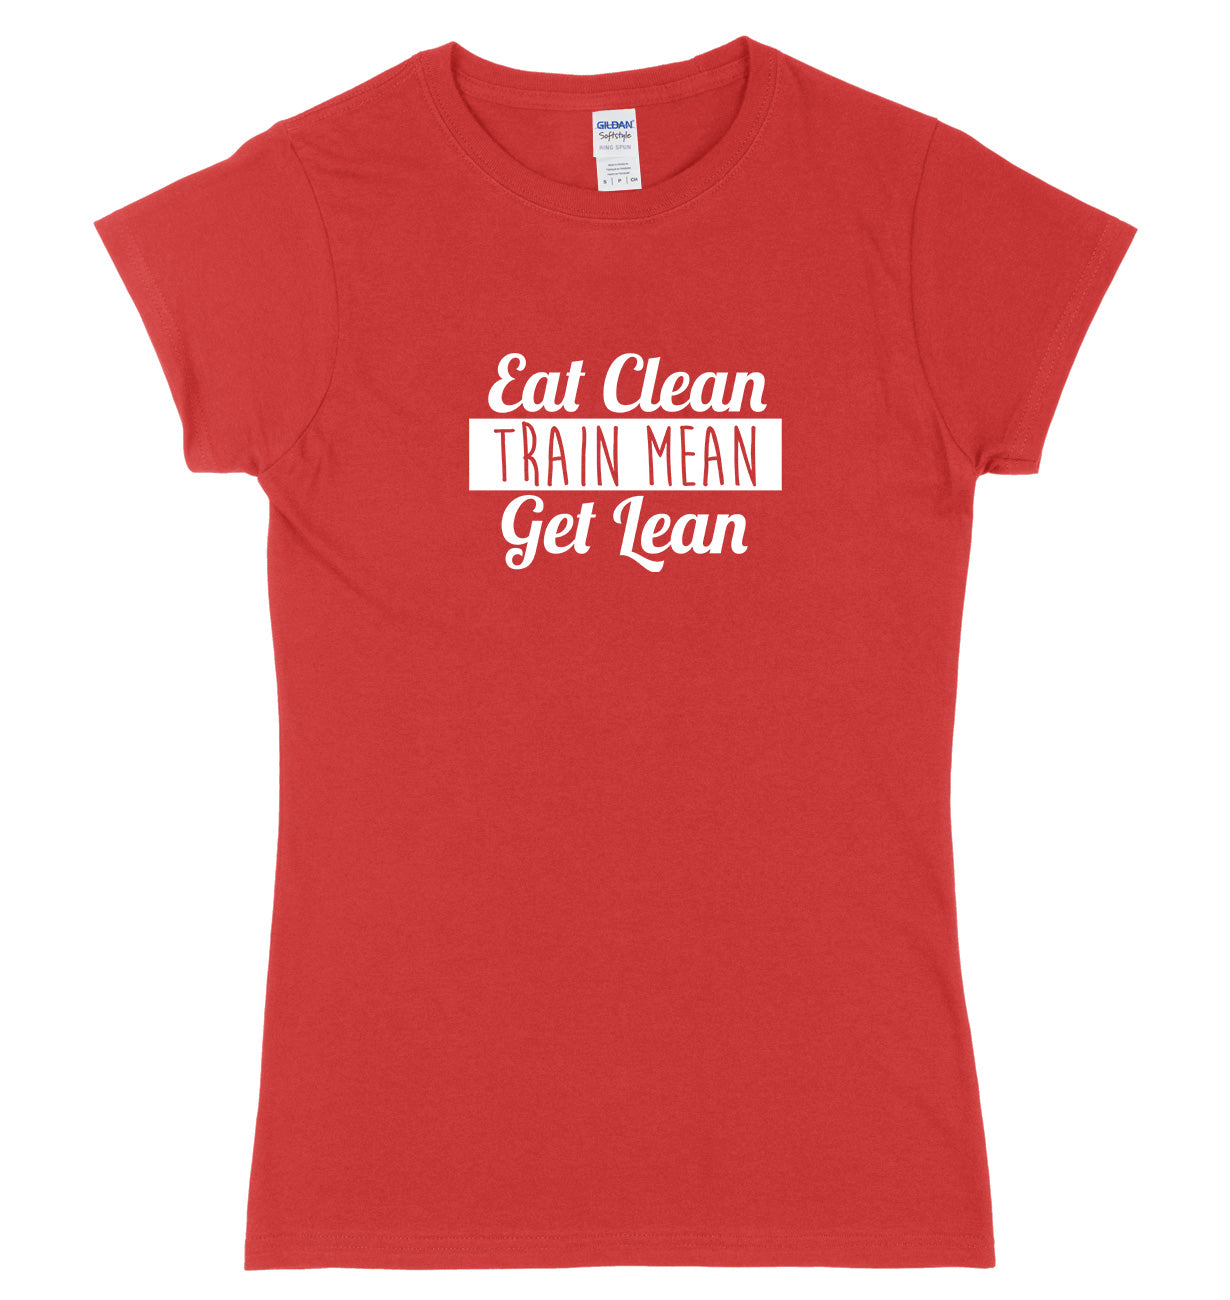 Eat Clean Train Mean Get Lean Womens Ladies Slim Fit T-Shirt